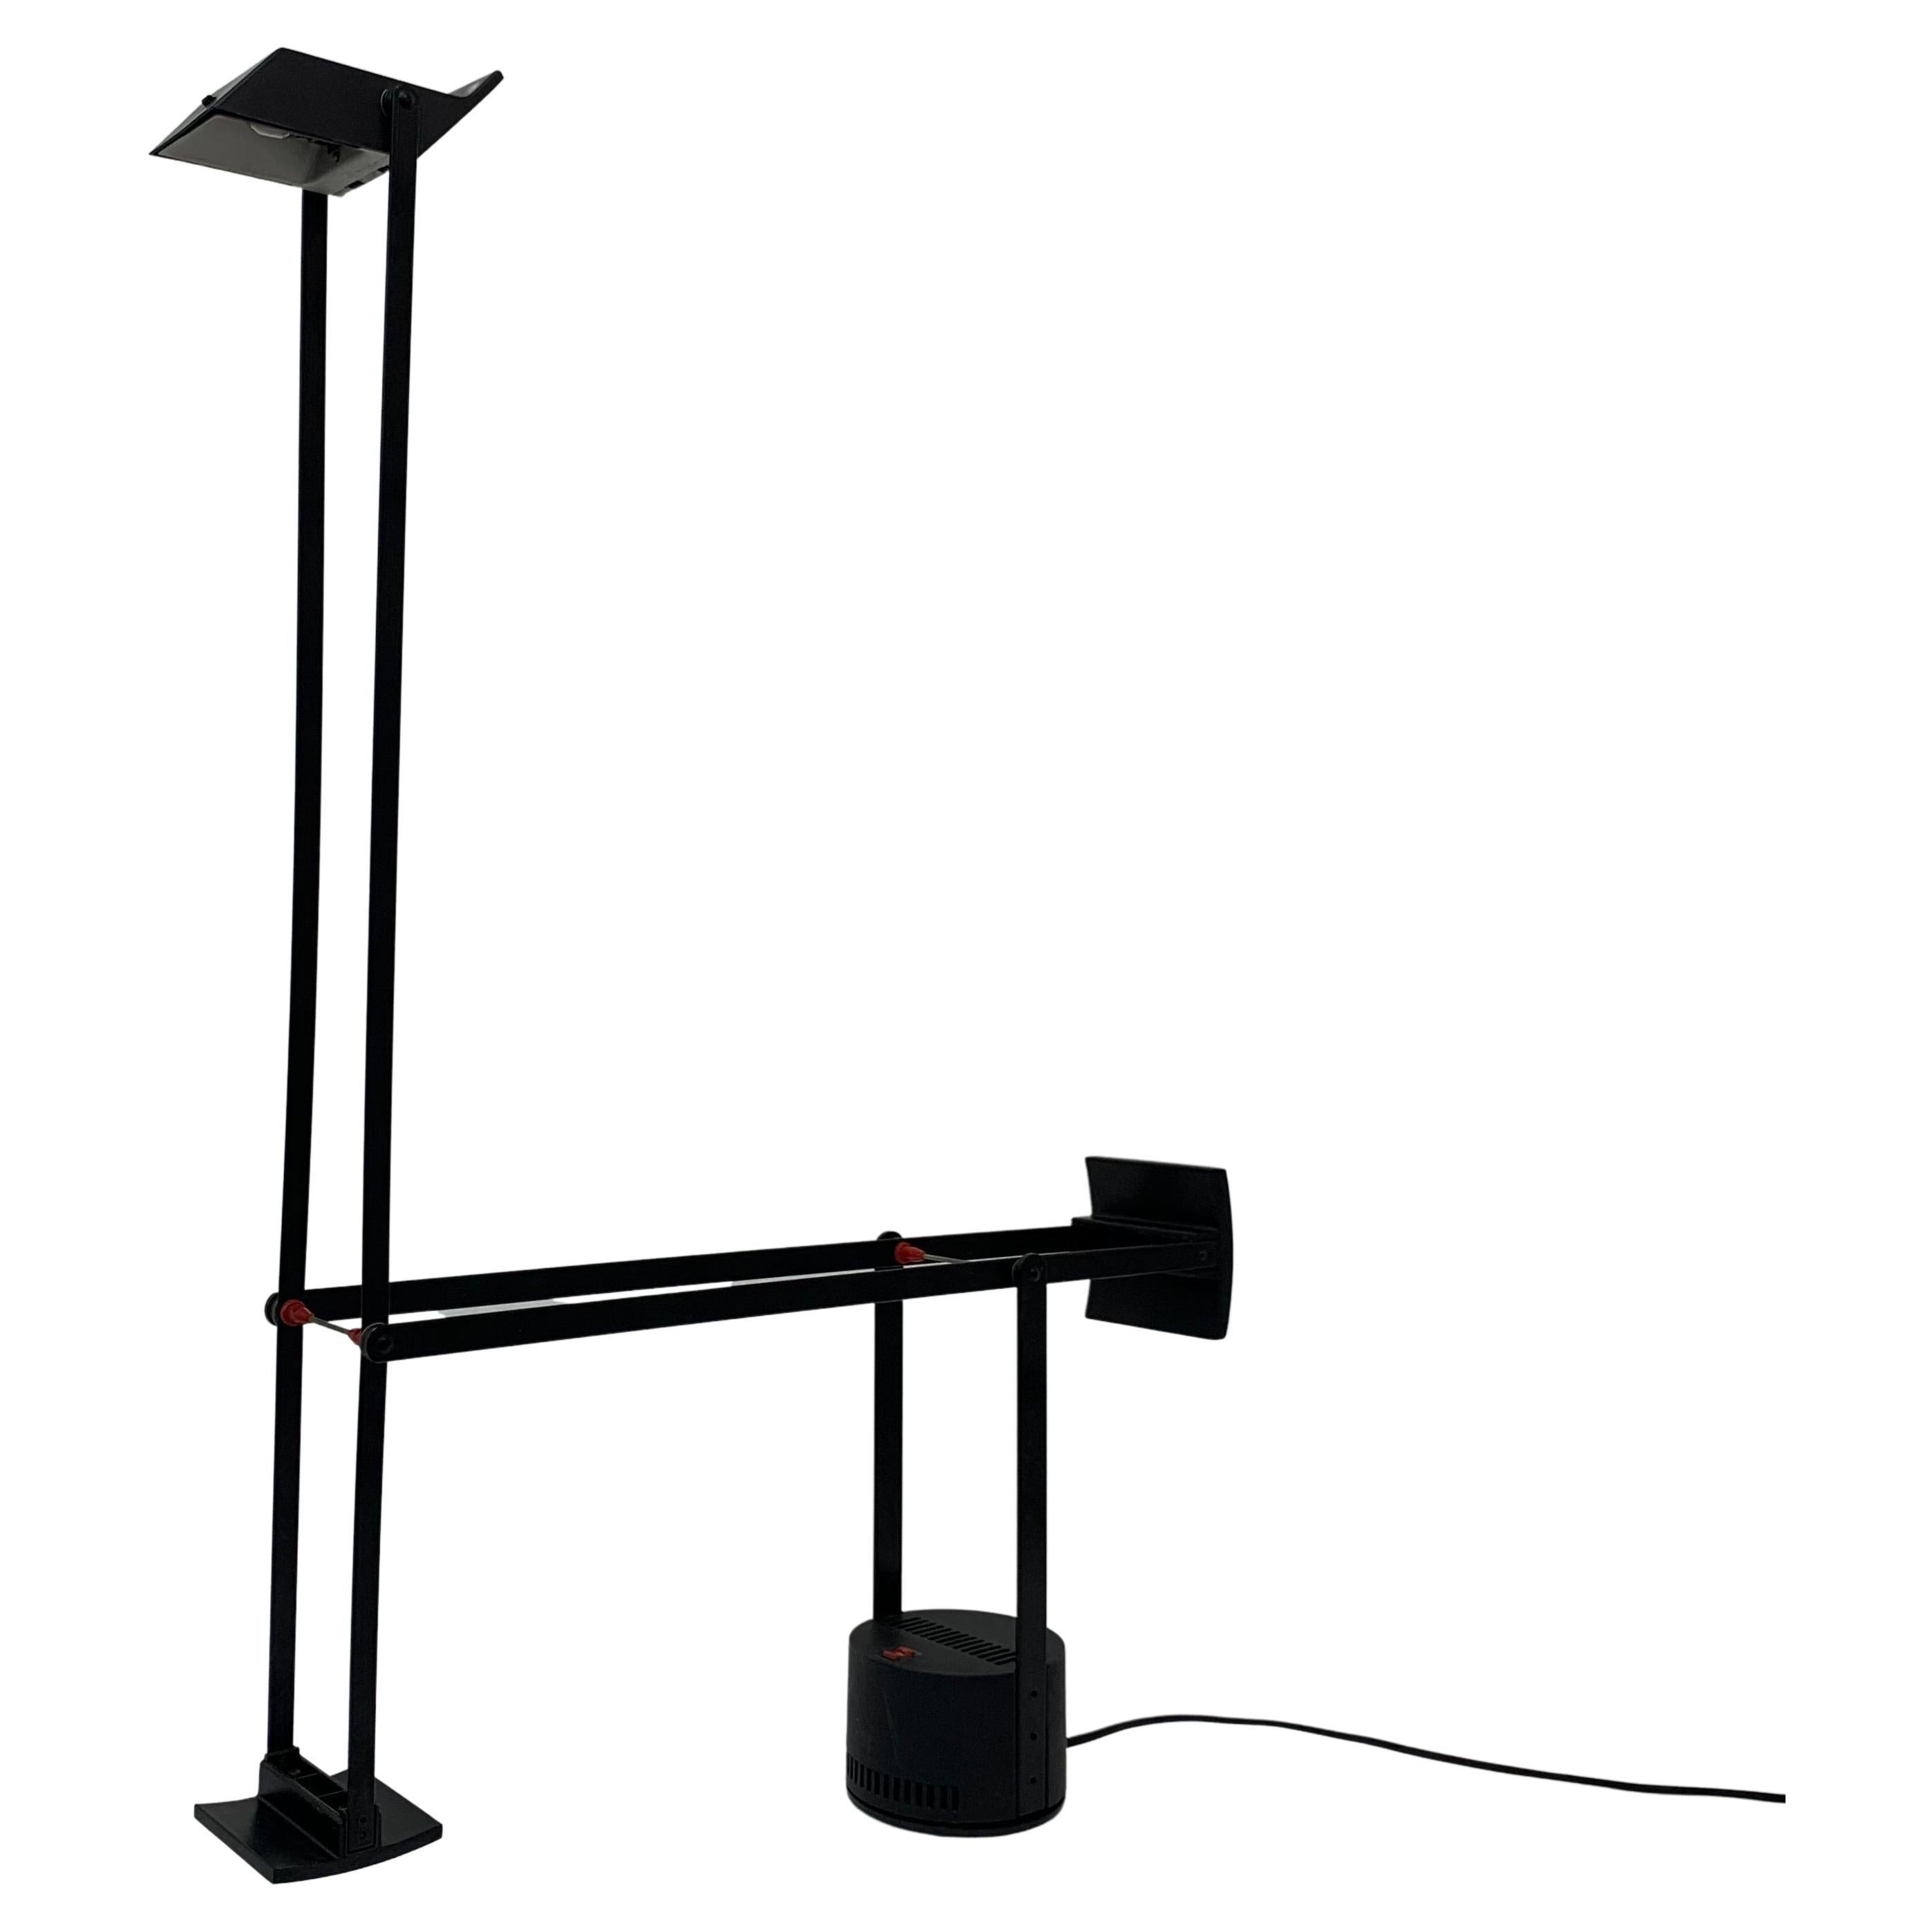 Tizio Table Lamp by Richard Sapper for Artemide, 1980's